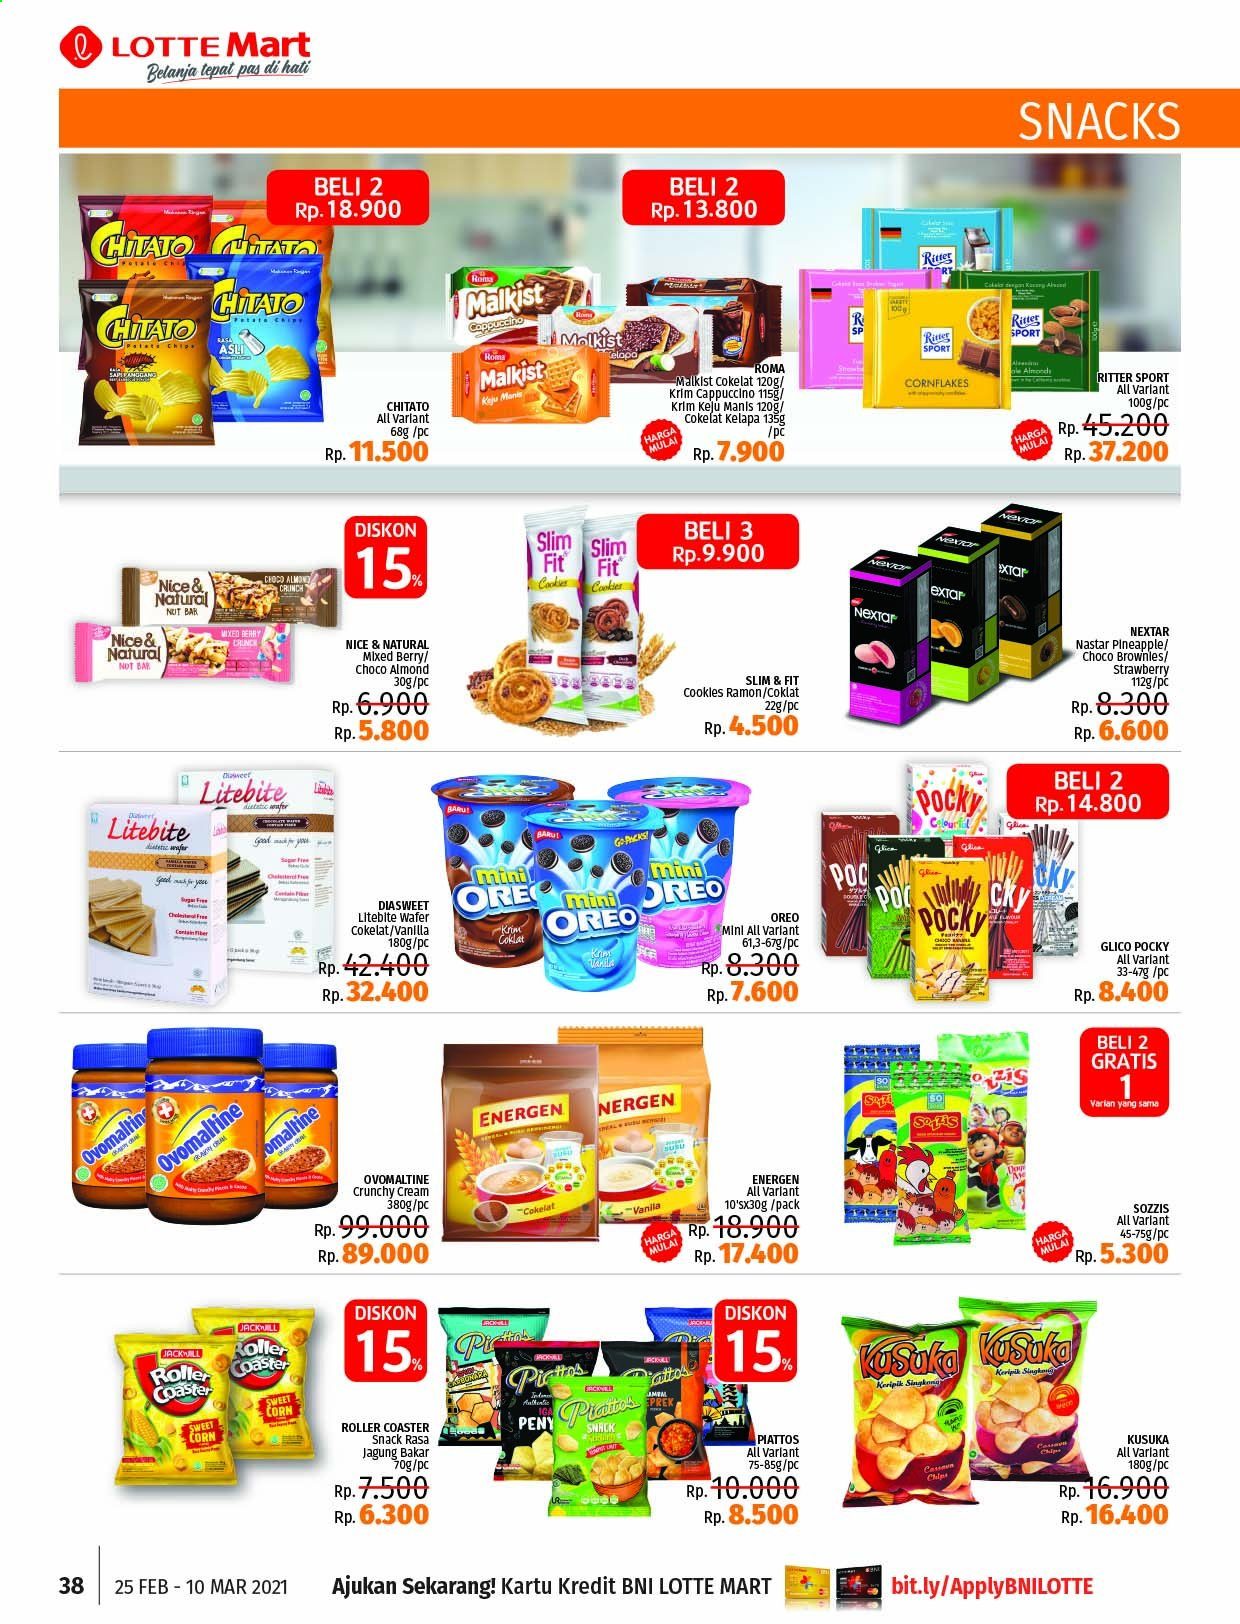 thumbnail - Promo LOTTE Mart - 02/25/2021 - 03/10/2021 - Produk diskon - wafer, pineapple, oreo, harga mulai, corn, cappuccino. Halaman 35.